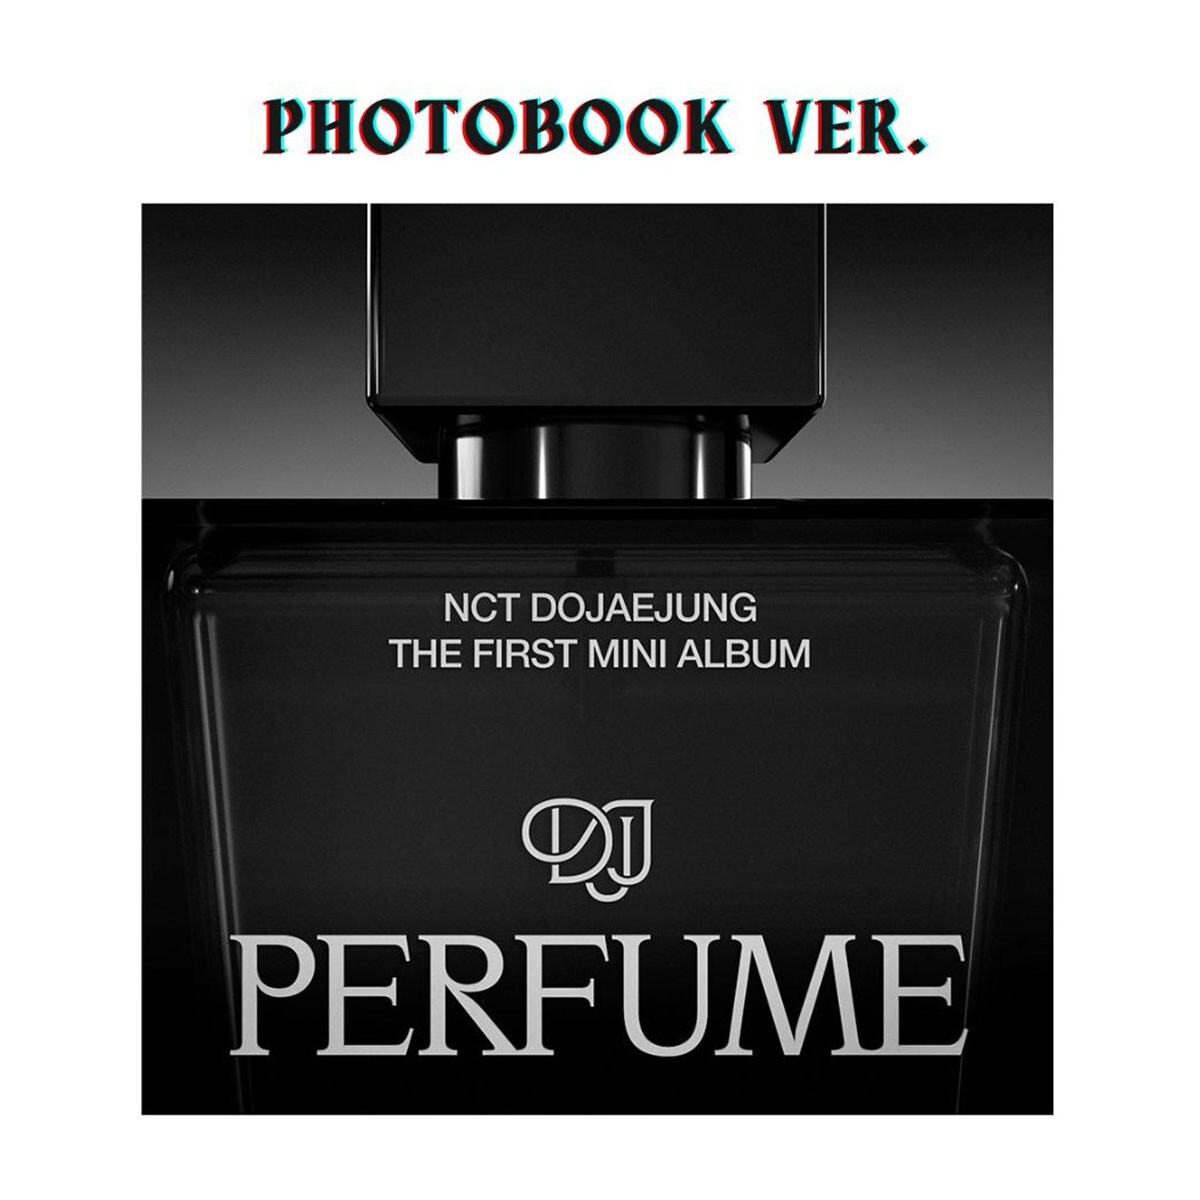 Nct Dojaejung - Perfume - Photobook Version - Cd 